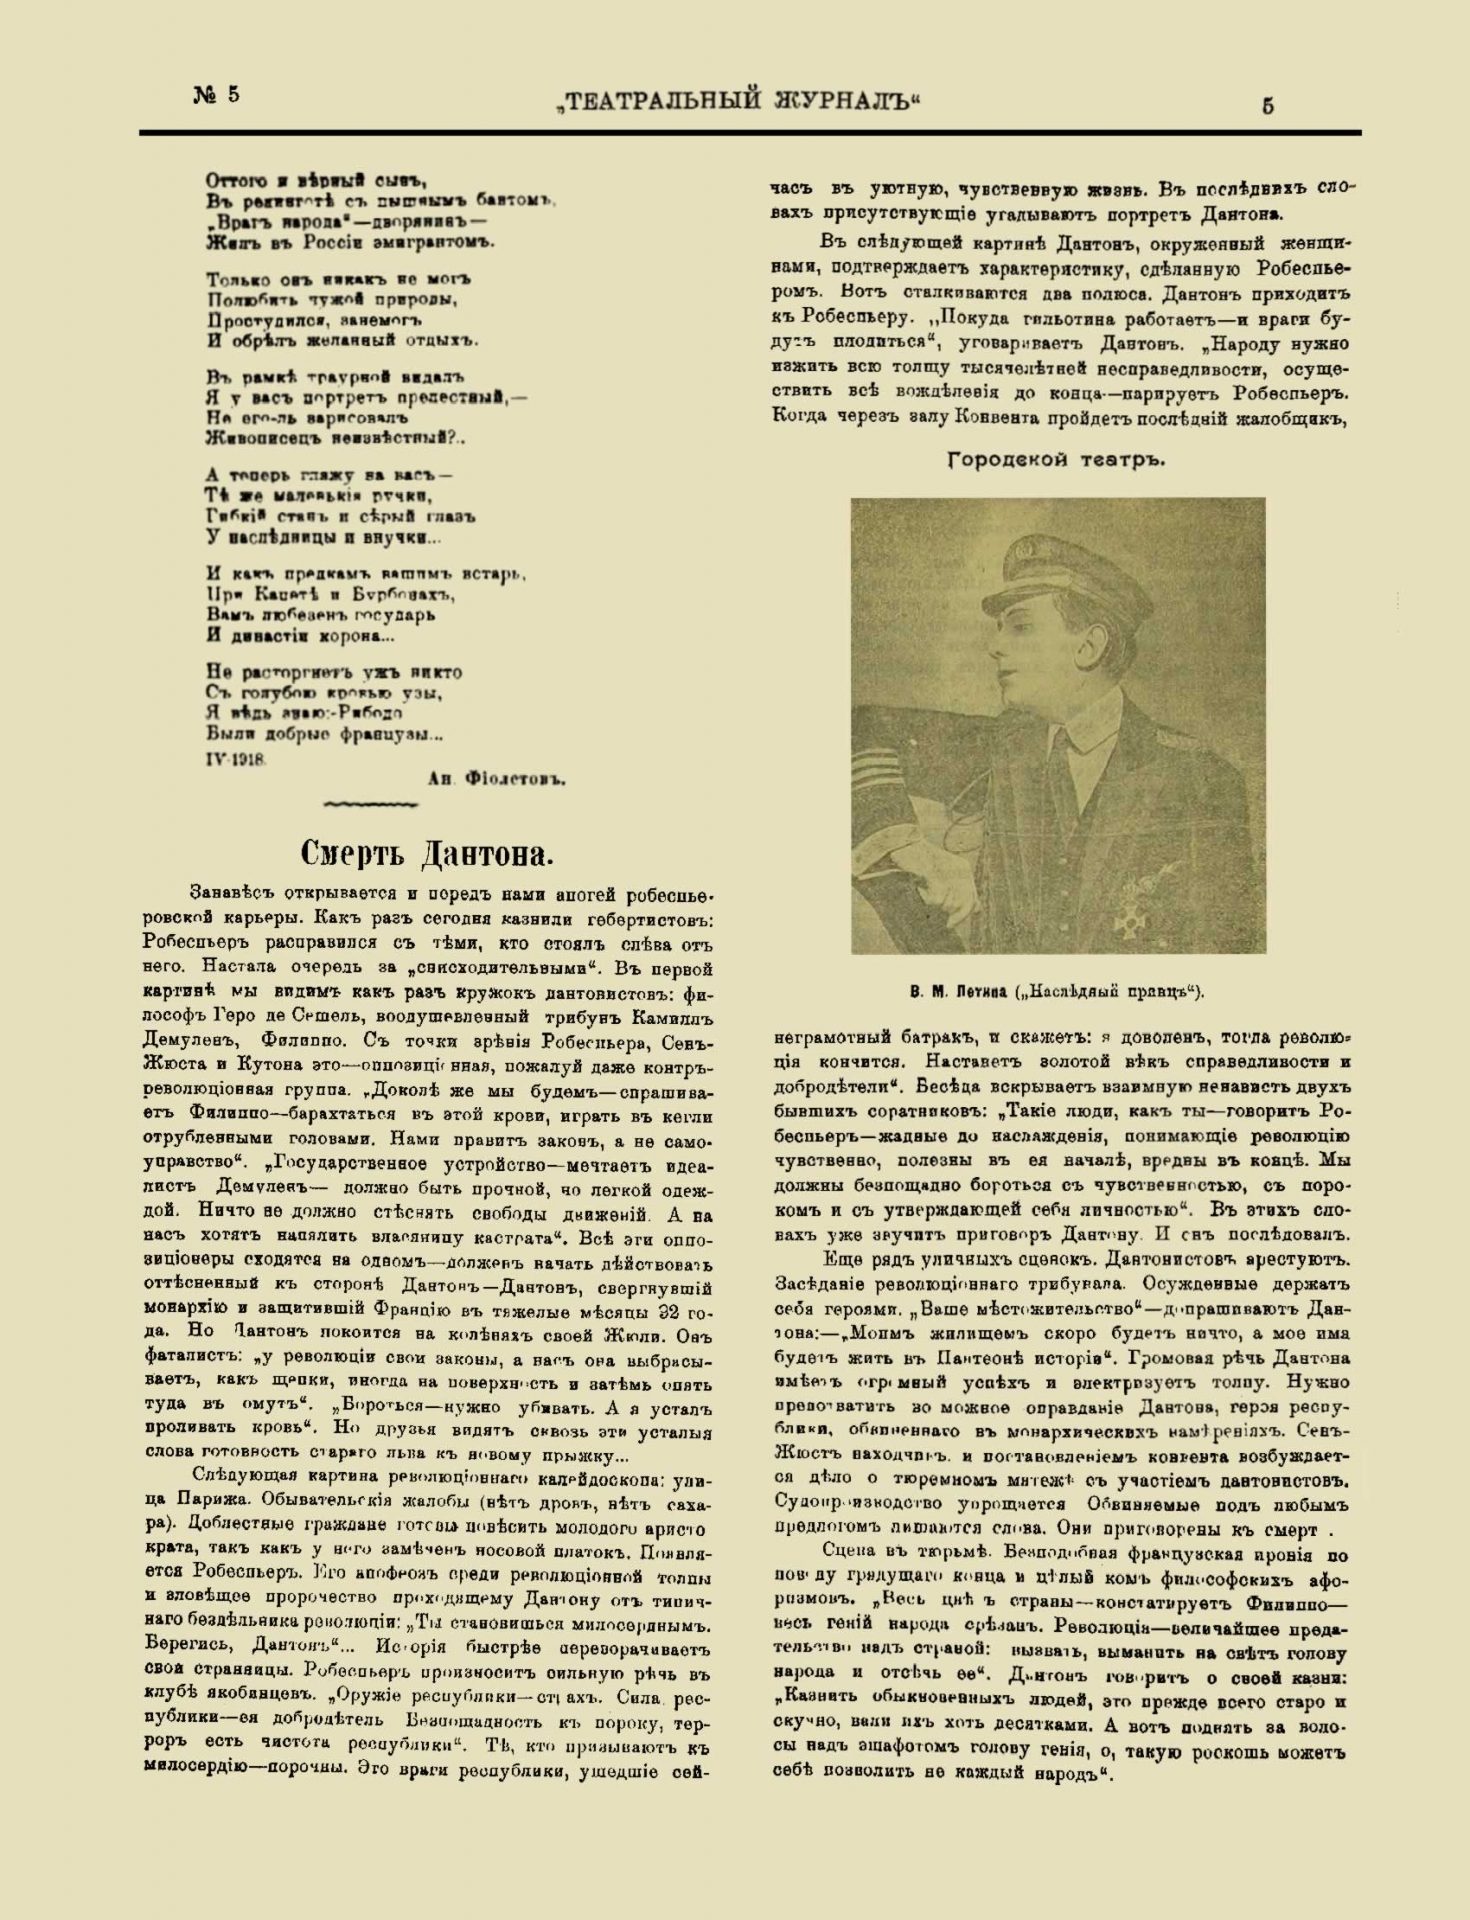 Театральный журнал_1918_№5